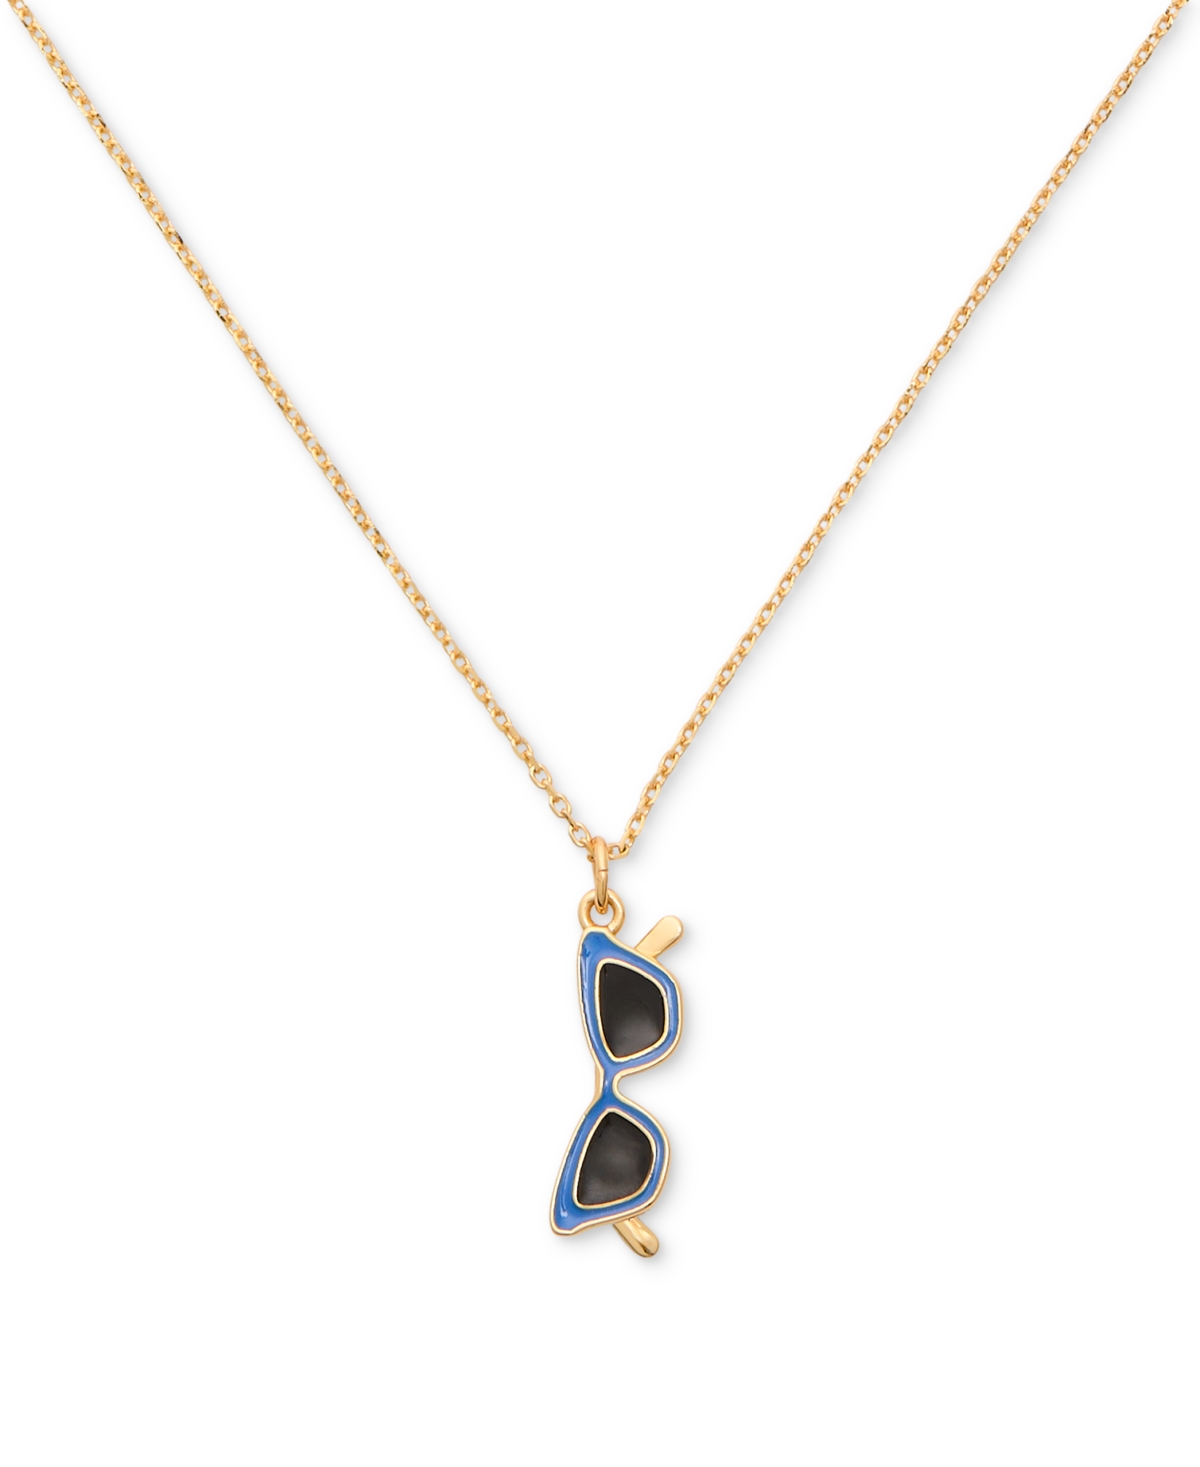 Gold-Tone Sweet Treasures Mini Pendant Necklace, 16" + 3" extender - Blue Gold.